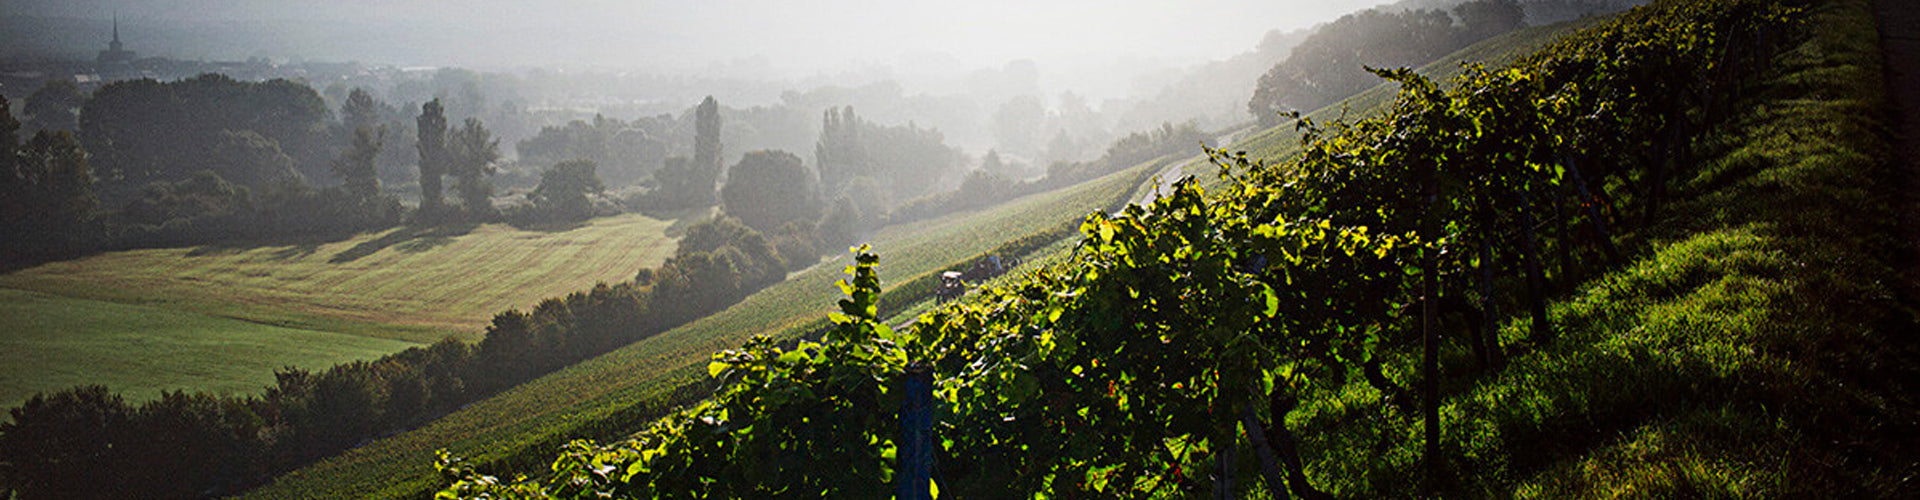 Vineyards in the Franken Wine Region of Germany